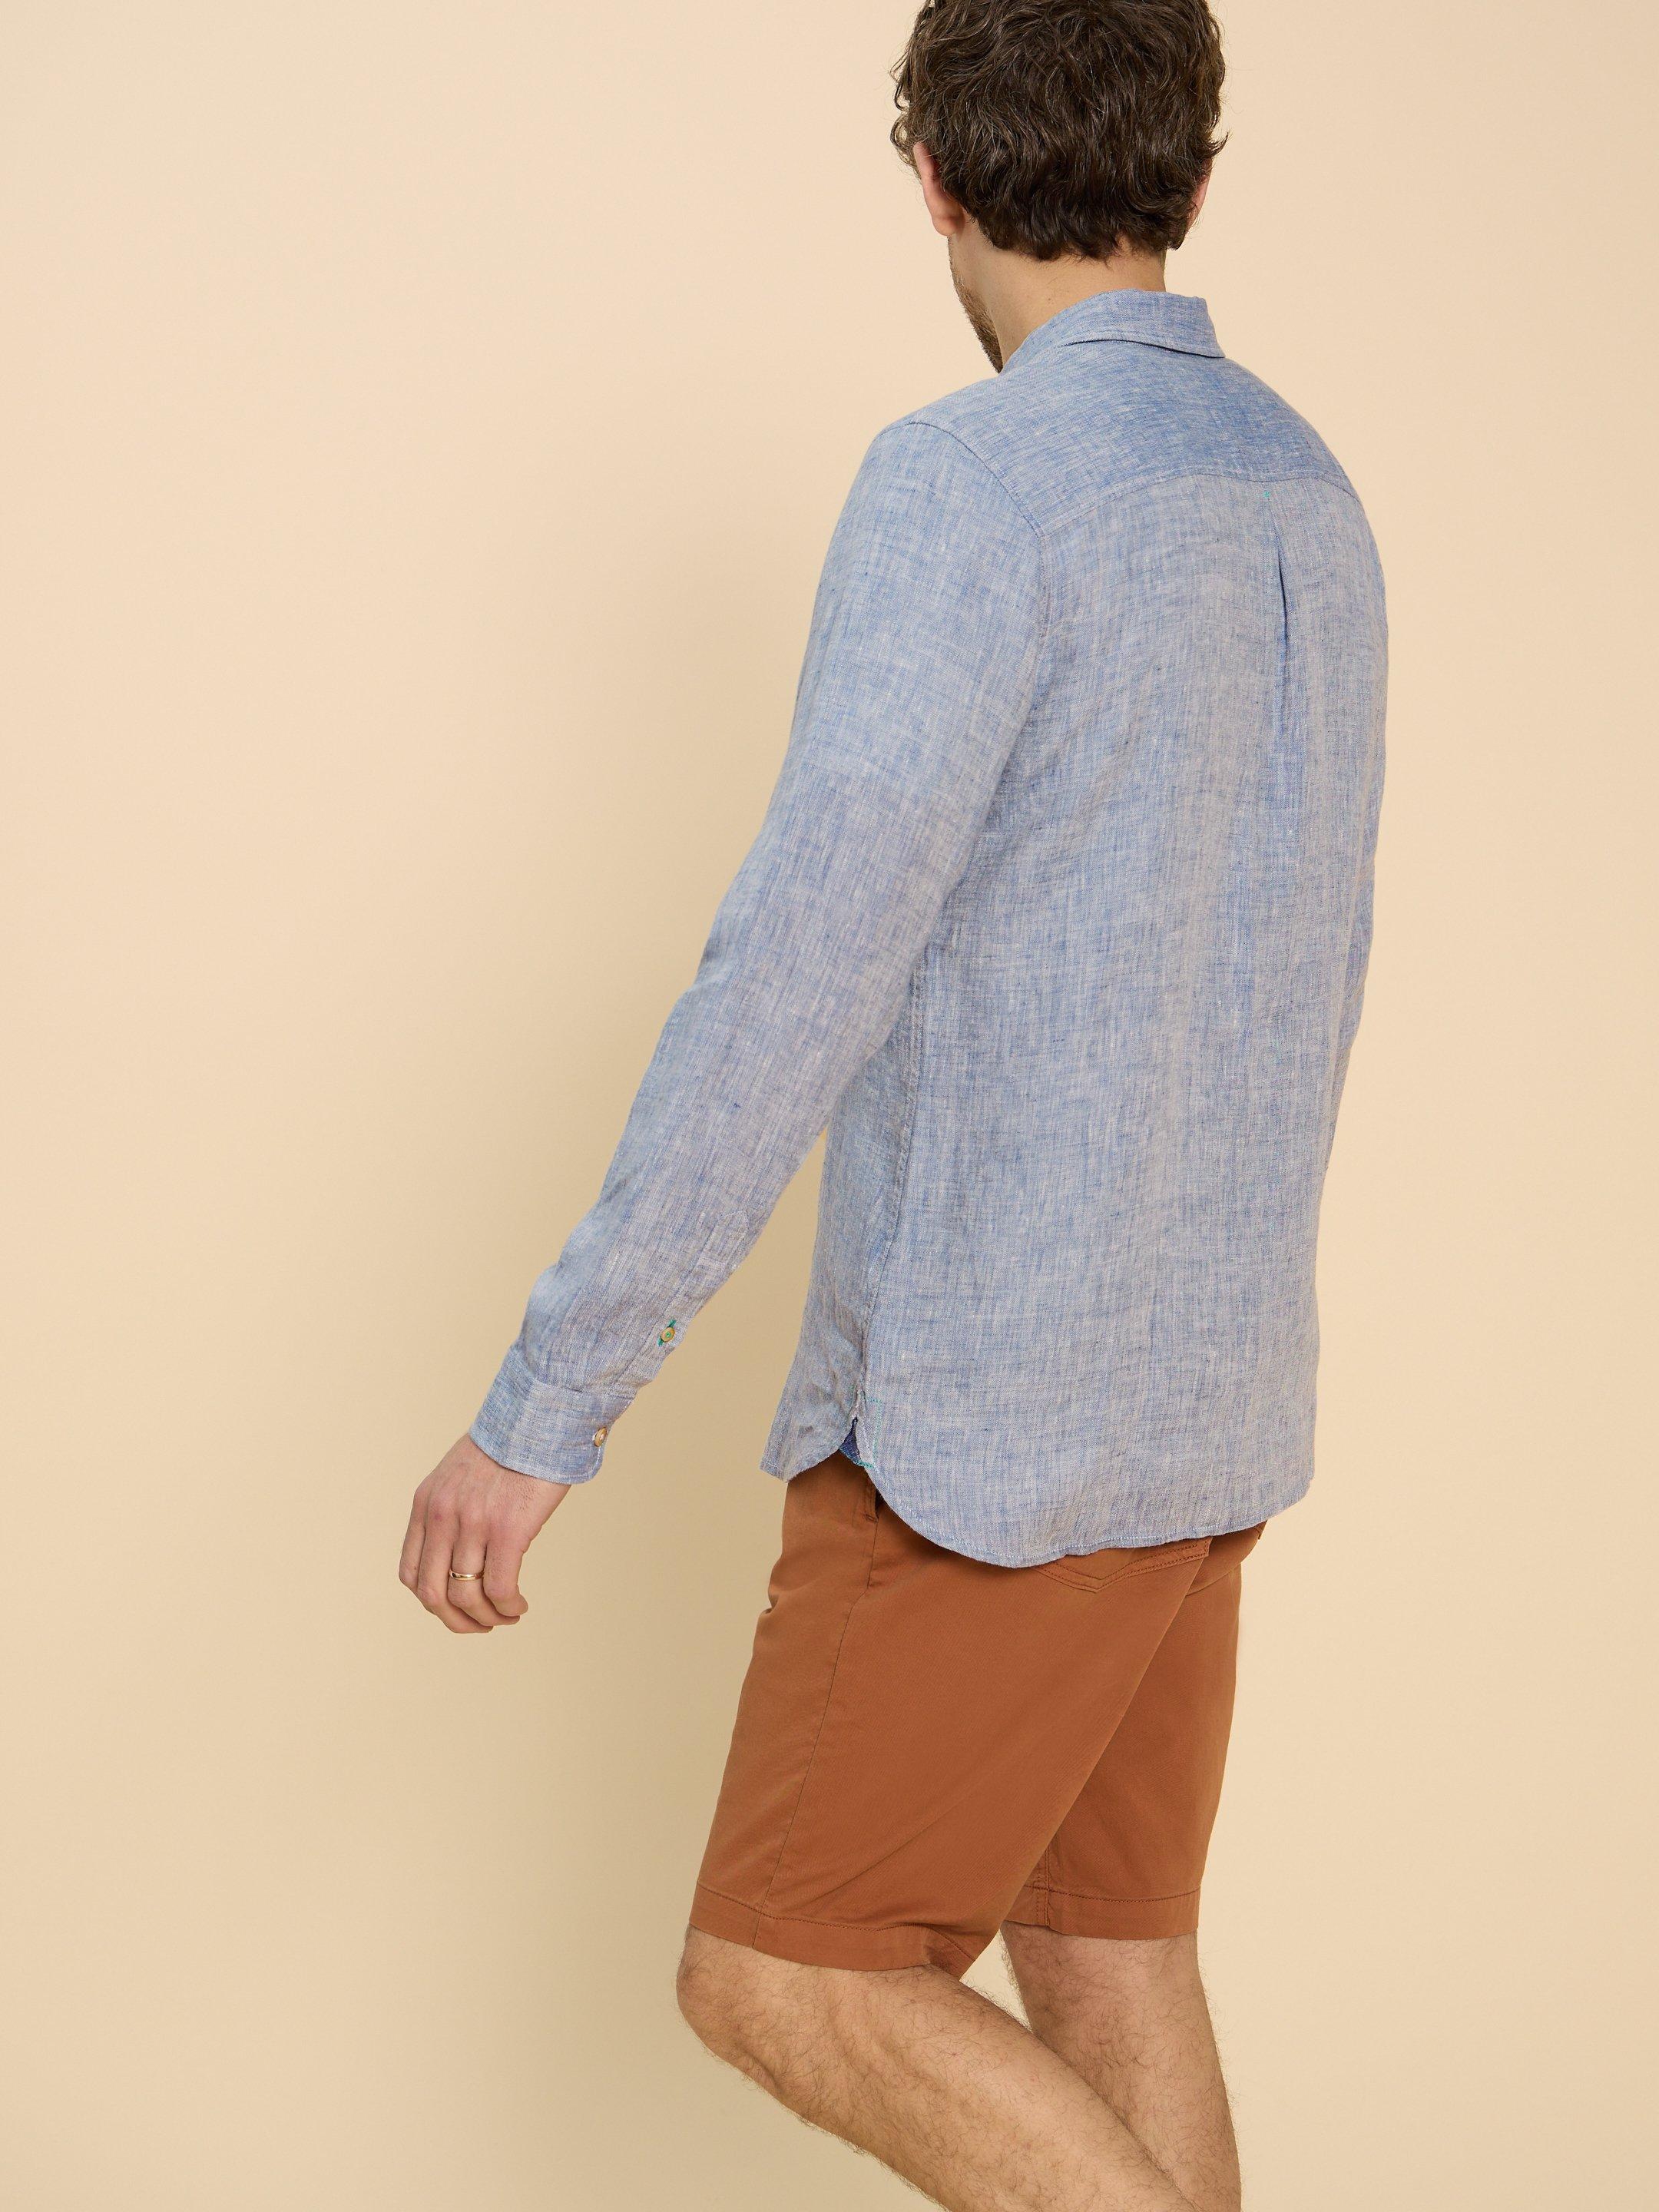 Pembroke LS Linen Shirt in CHAMB BLUE - MODEL BACK